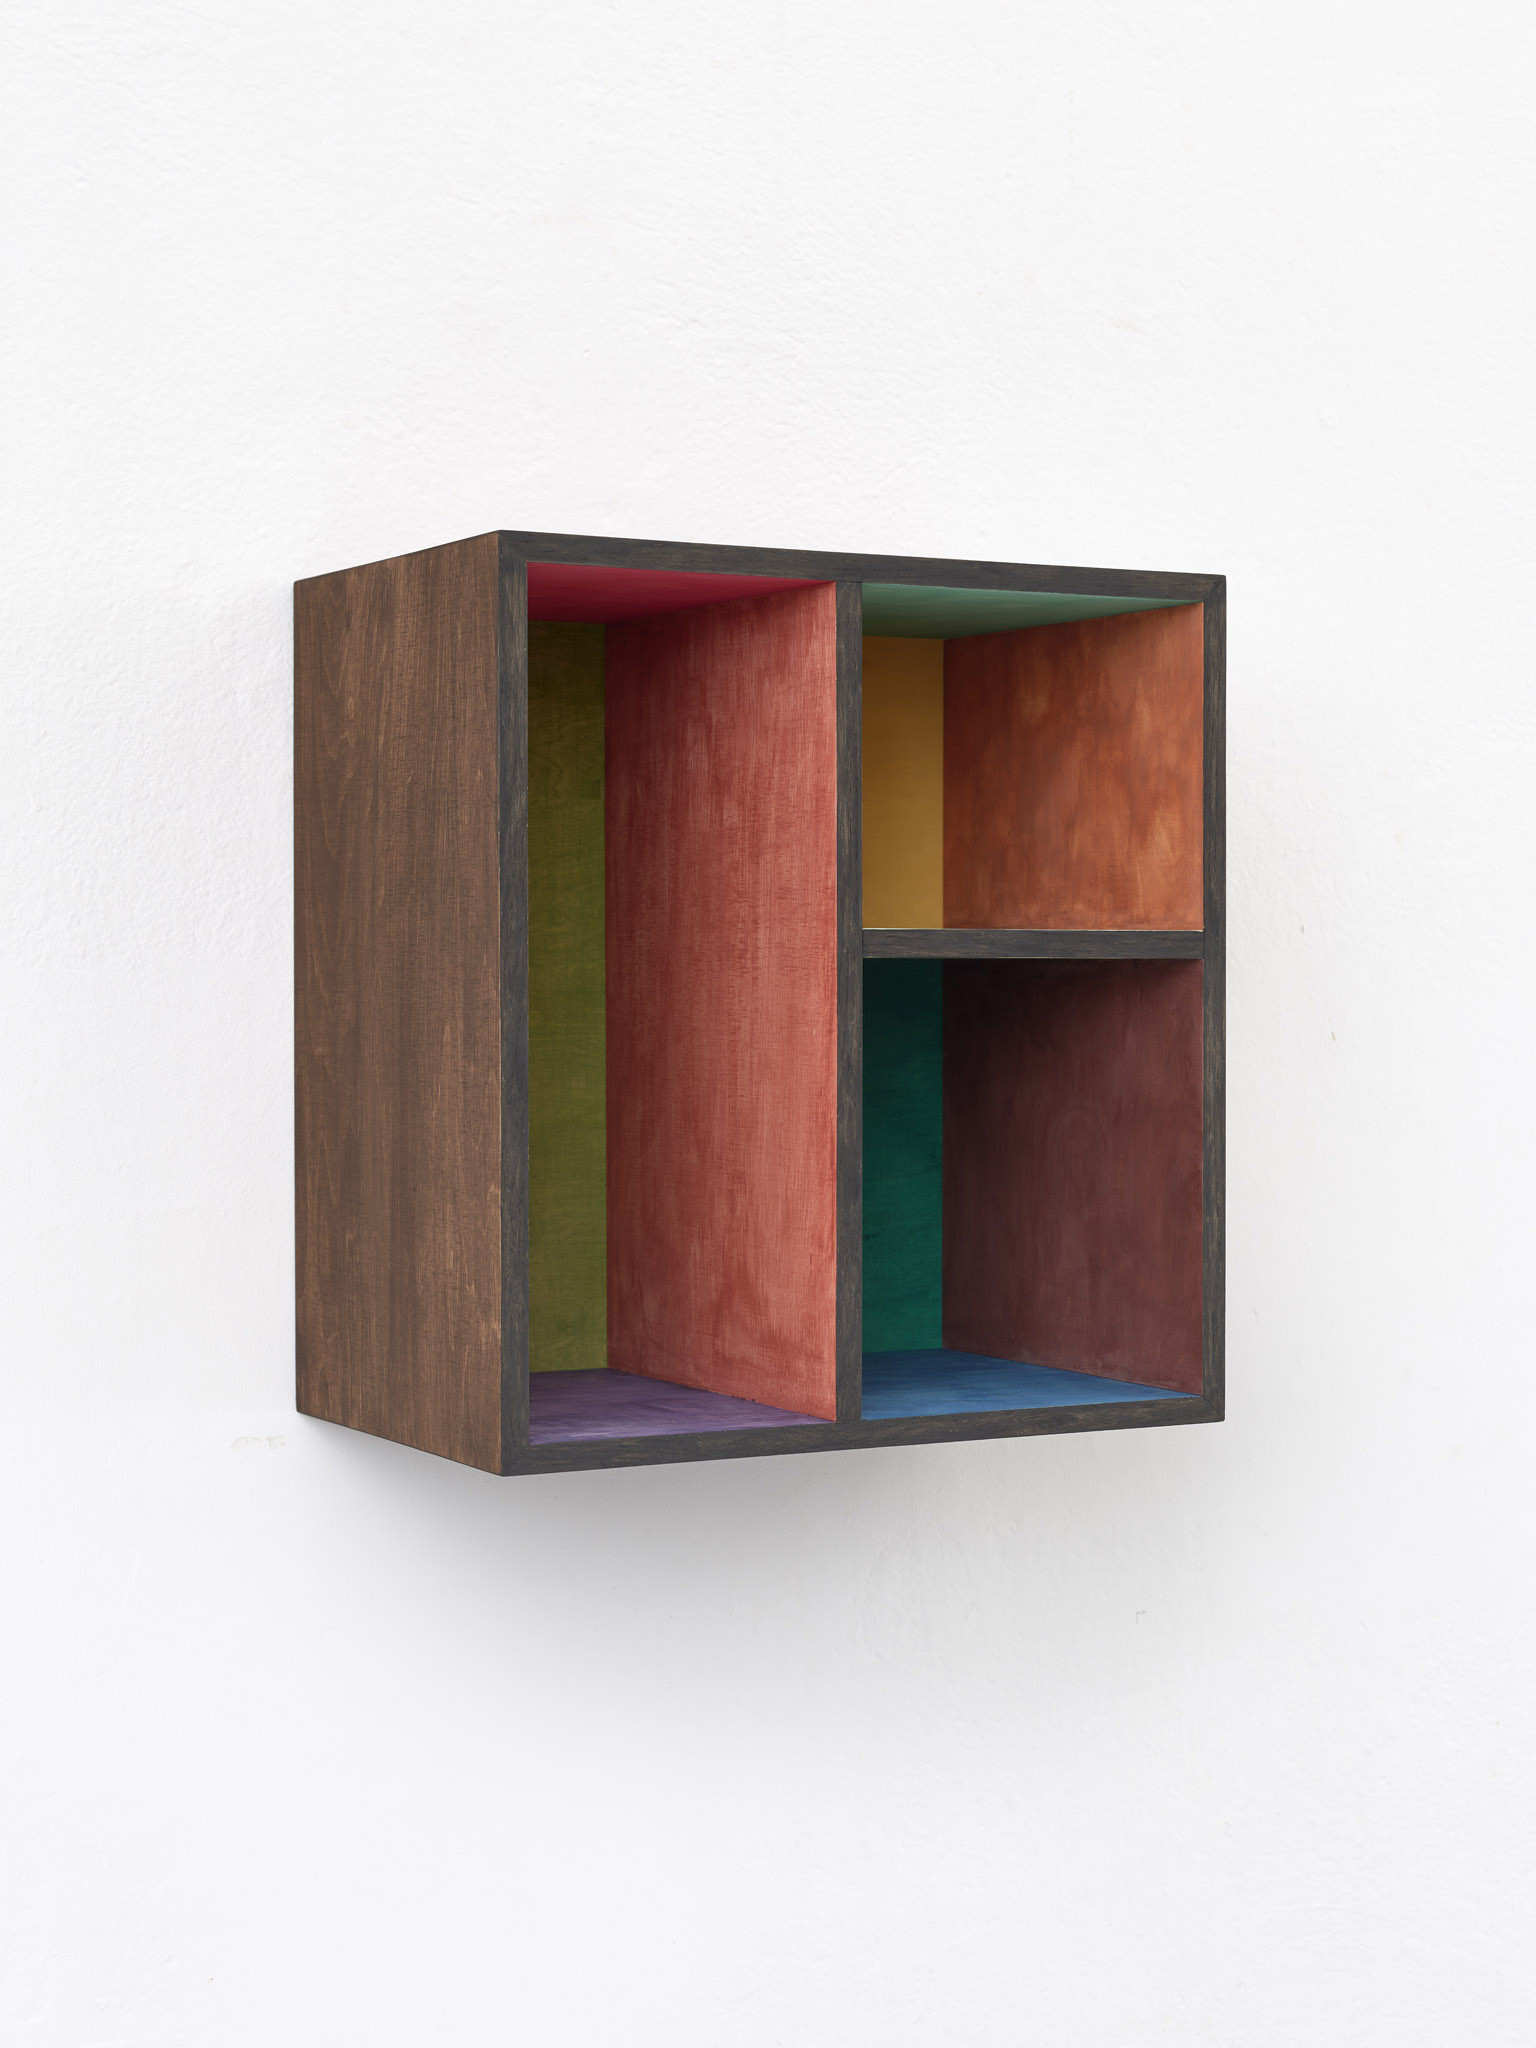 Sunah Choi, "Small Shelf Geneva", 2023, wood color, 42 x 46 x 30 cm